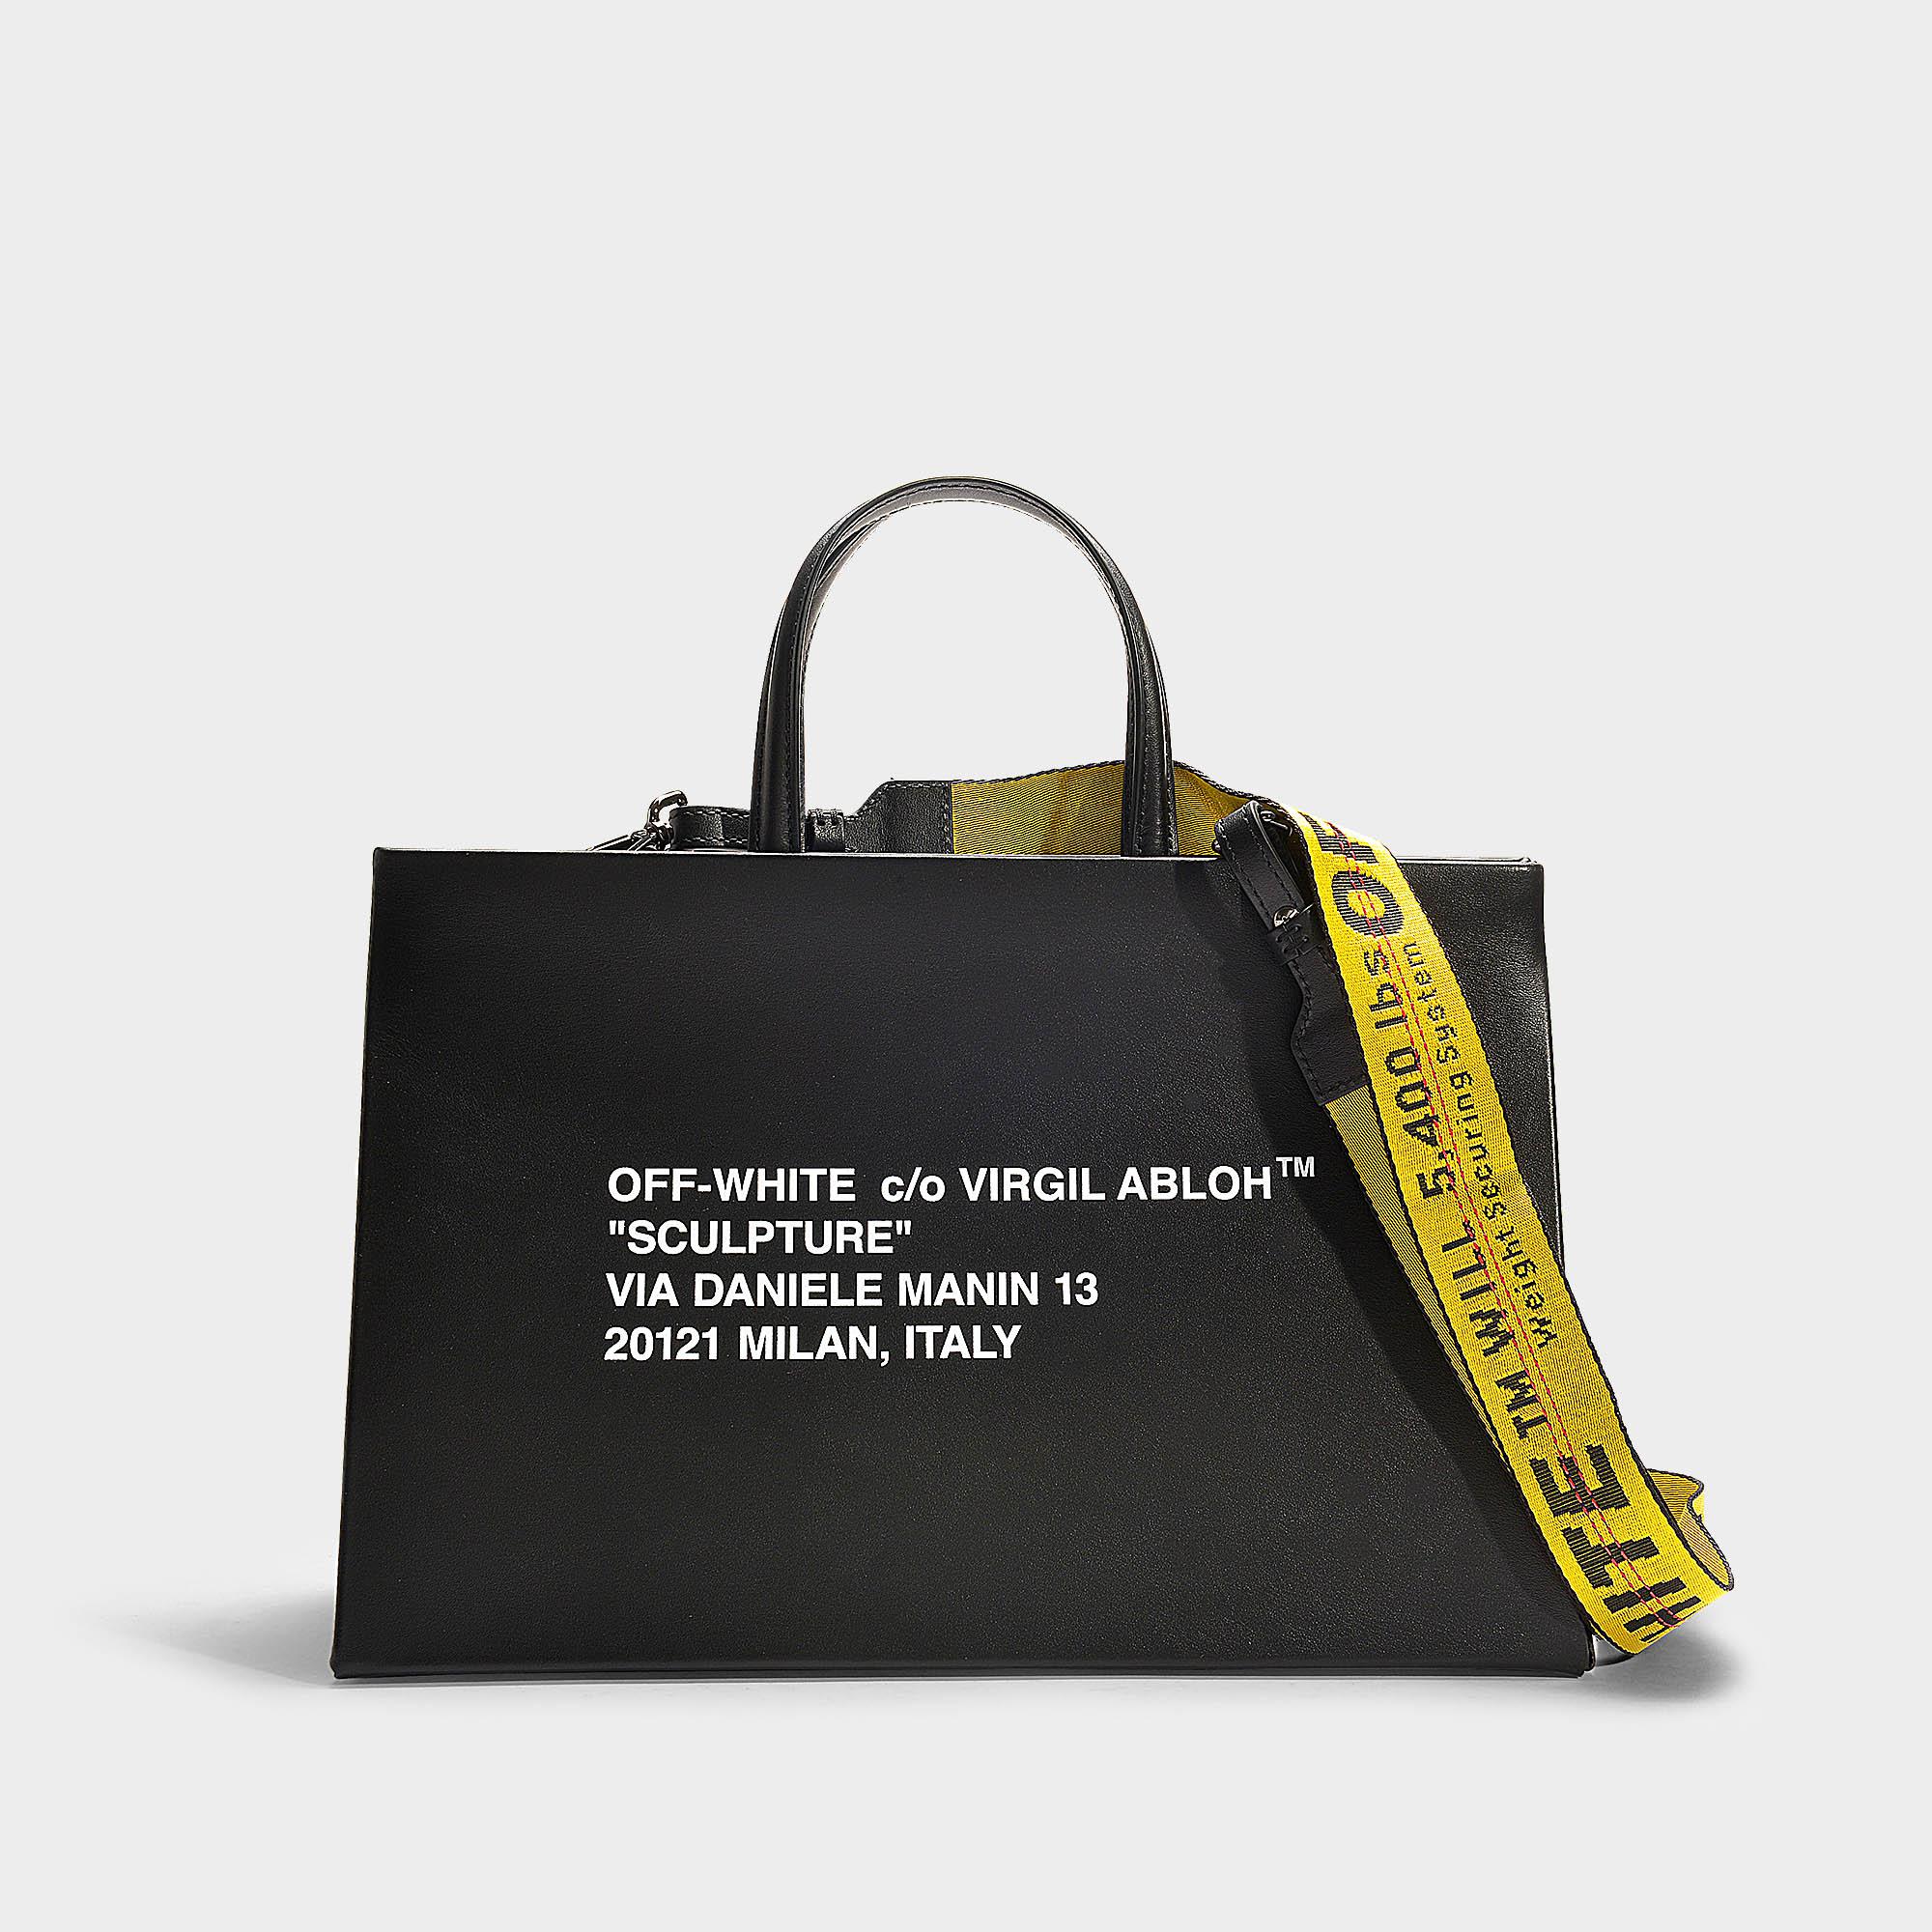 Off-White c/o Virgil Abloh Leather Medium Box Bag In Black And White  Calfskin | Lyst